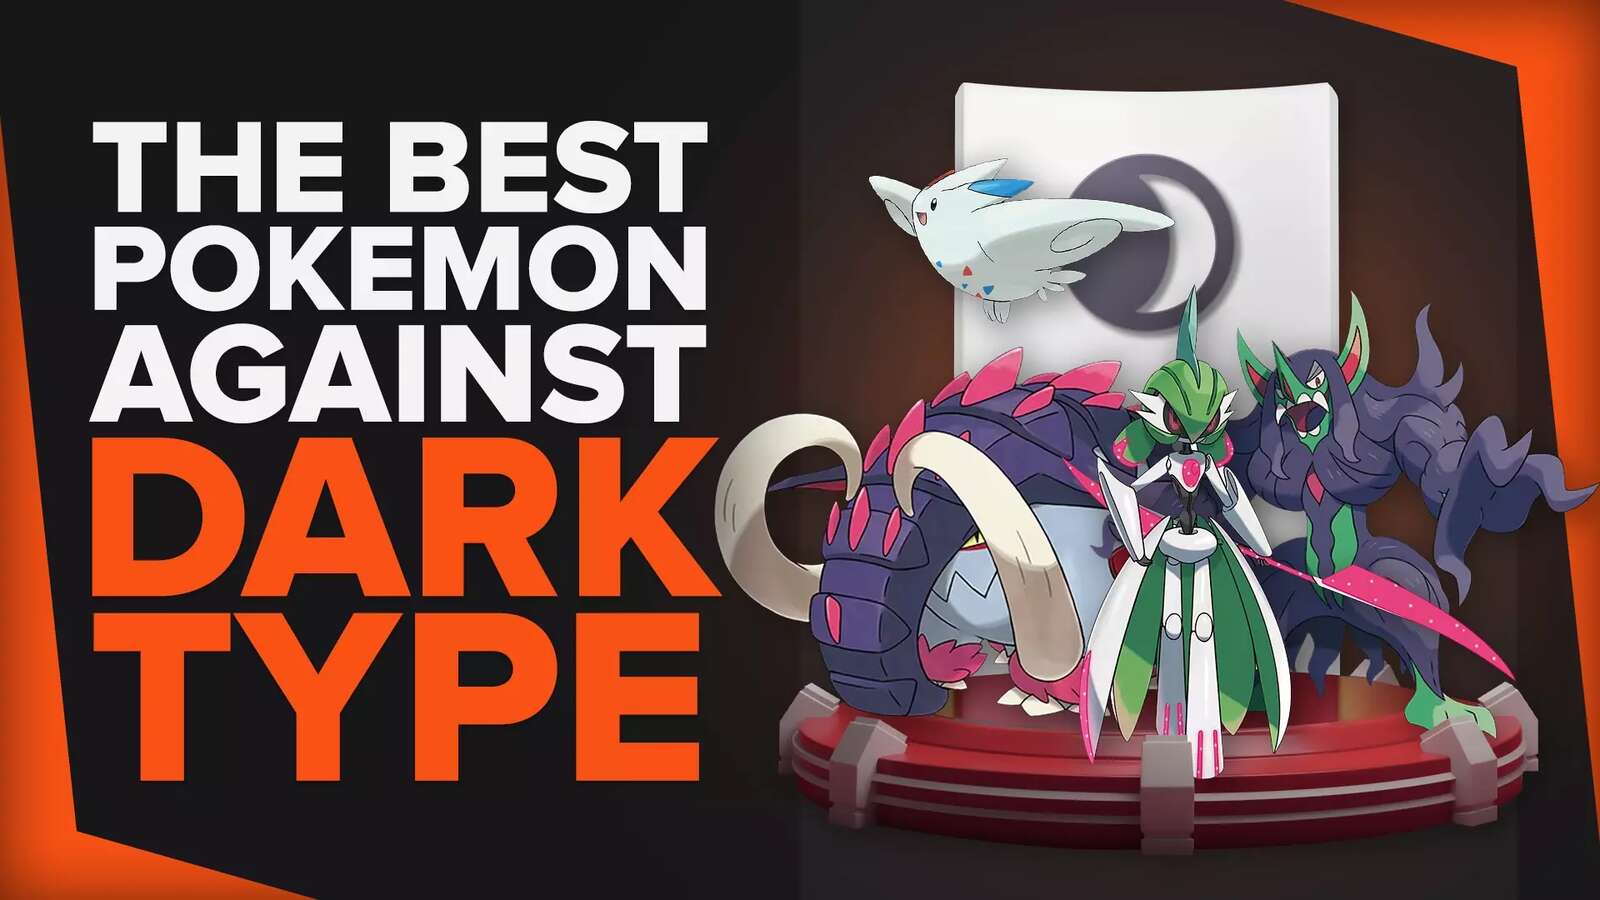 The 10 Best Pokemon Best Against Dark Type Pokemon [Ranked]